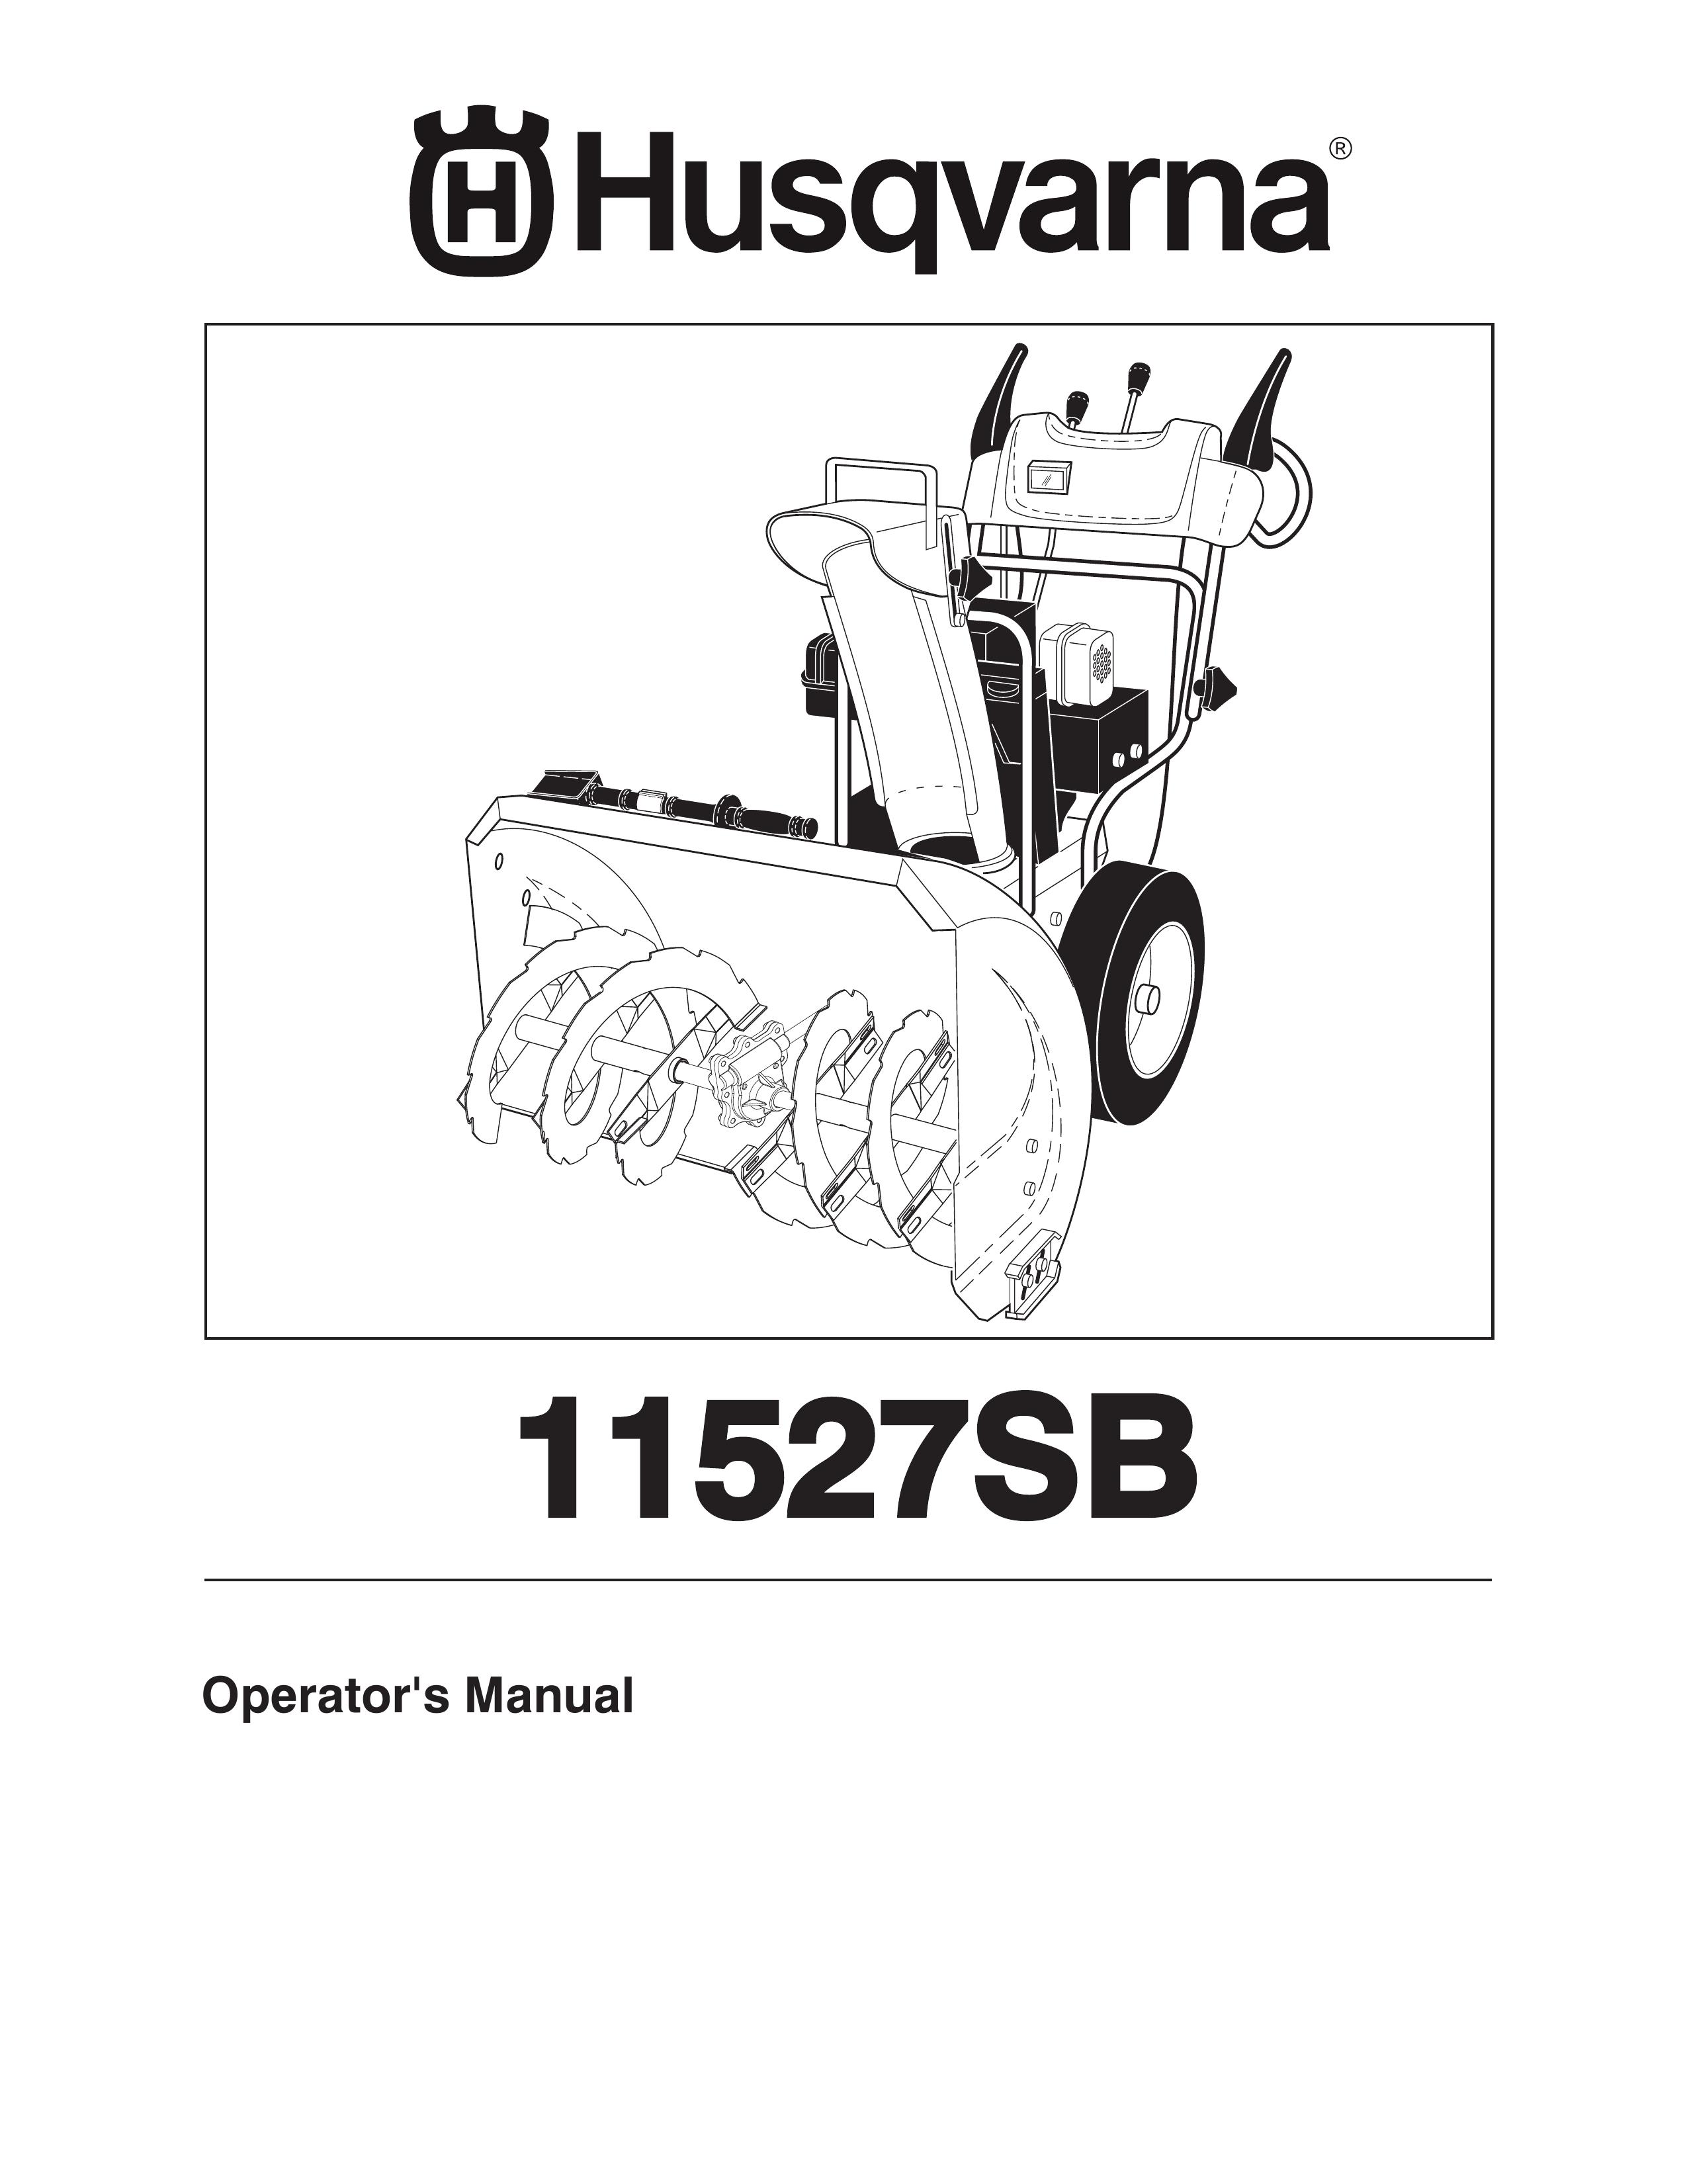 Husqvarna 11527SB Snow Blower User Manual